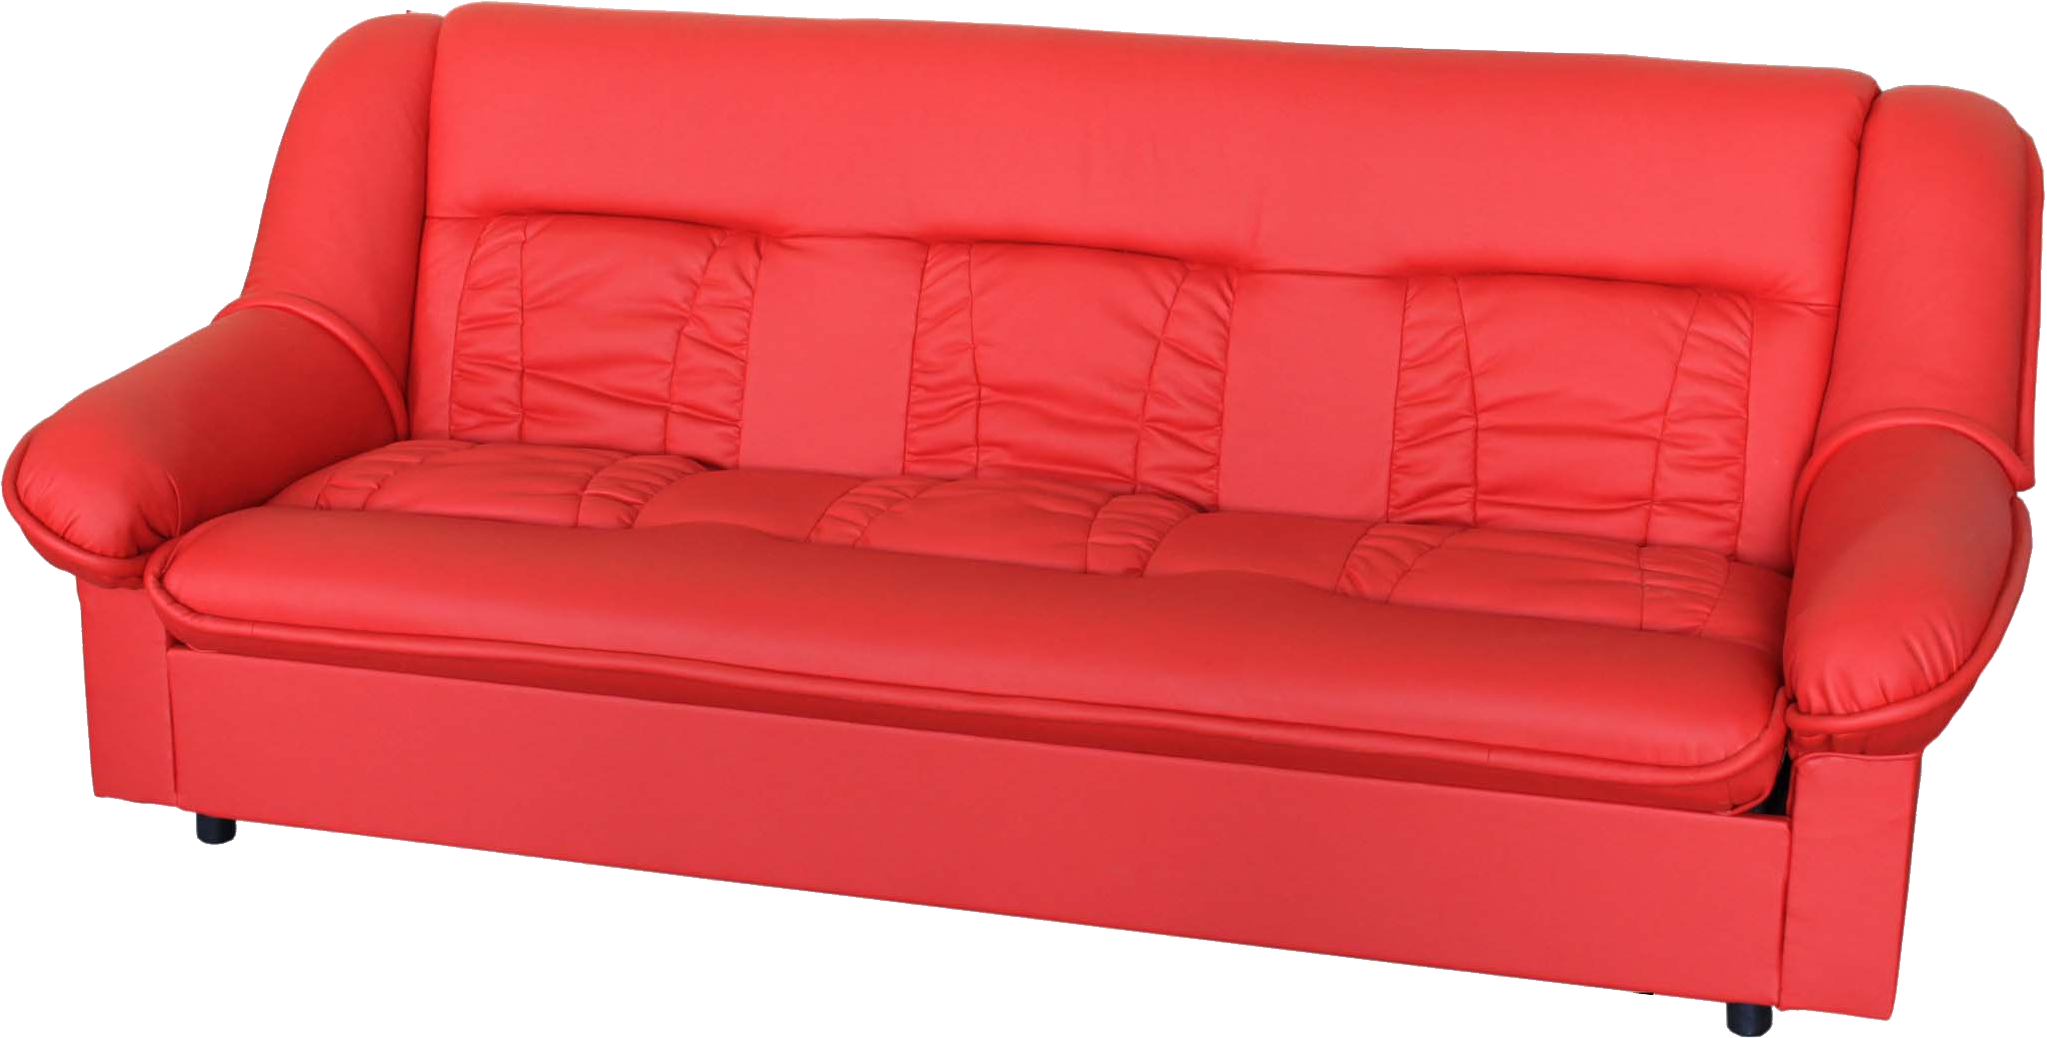 Rotes Sofa